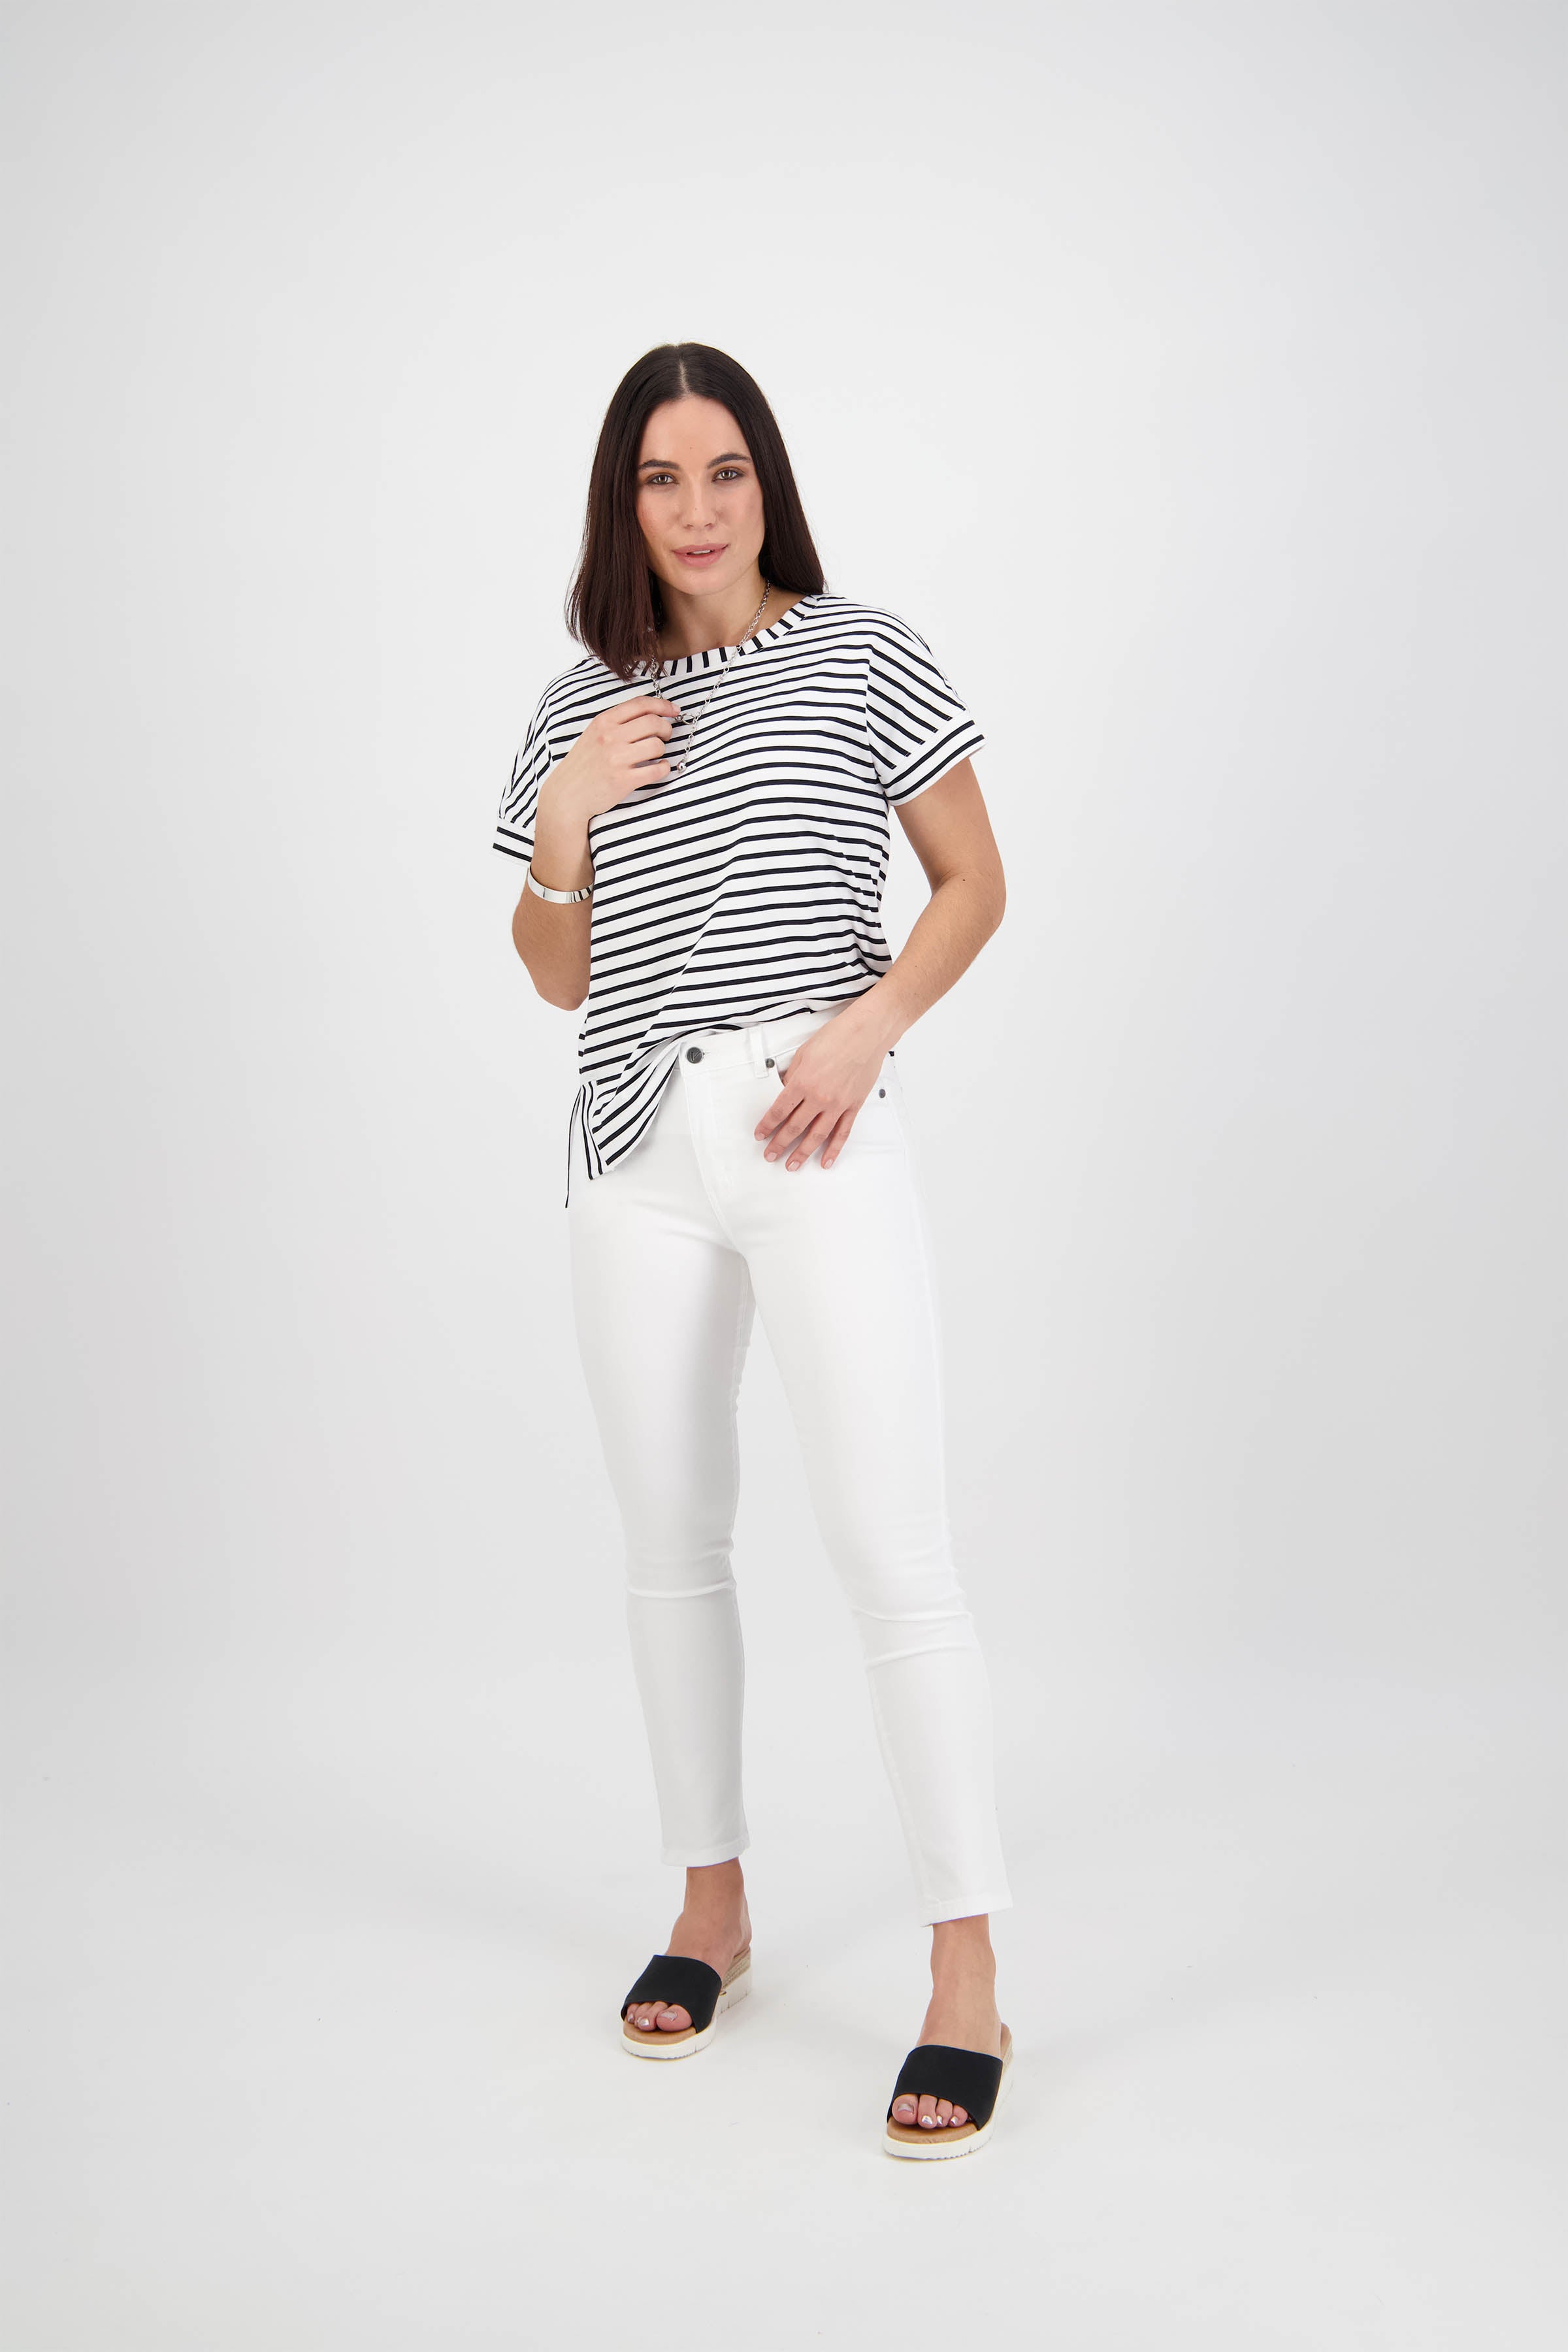 White Jeans, Womens White Denim Jeans Online NZ